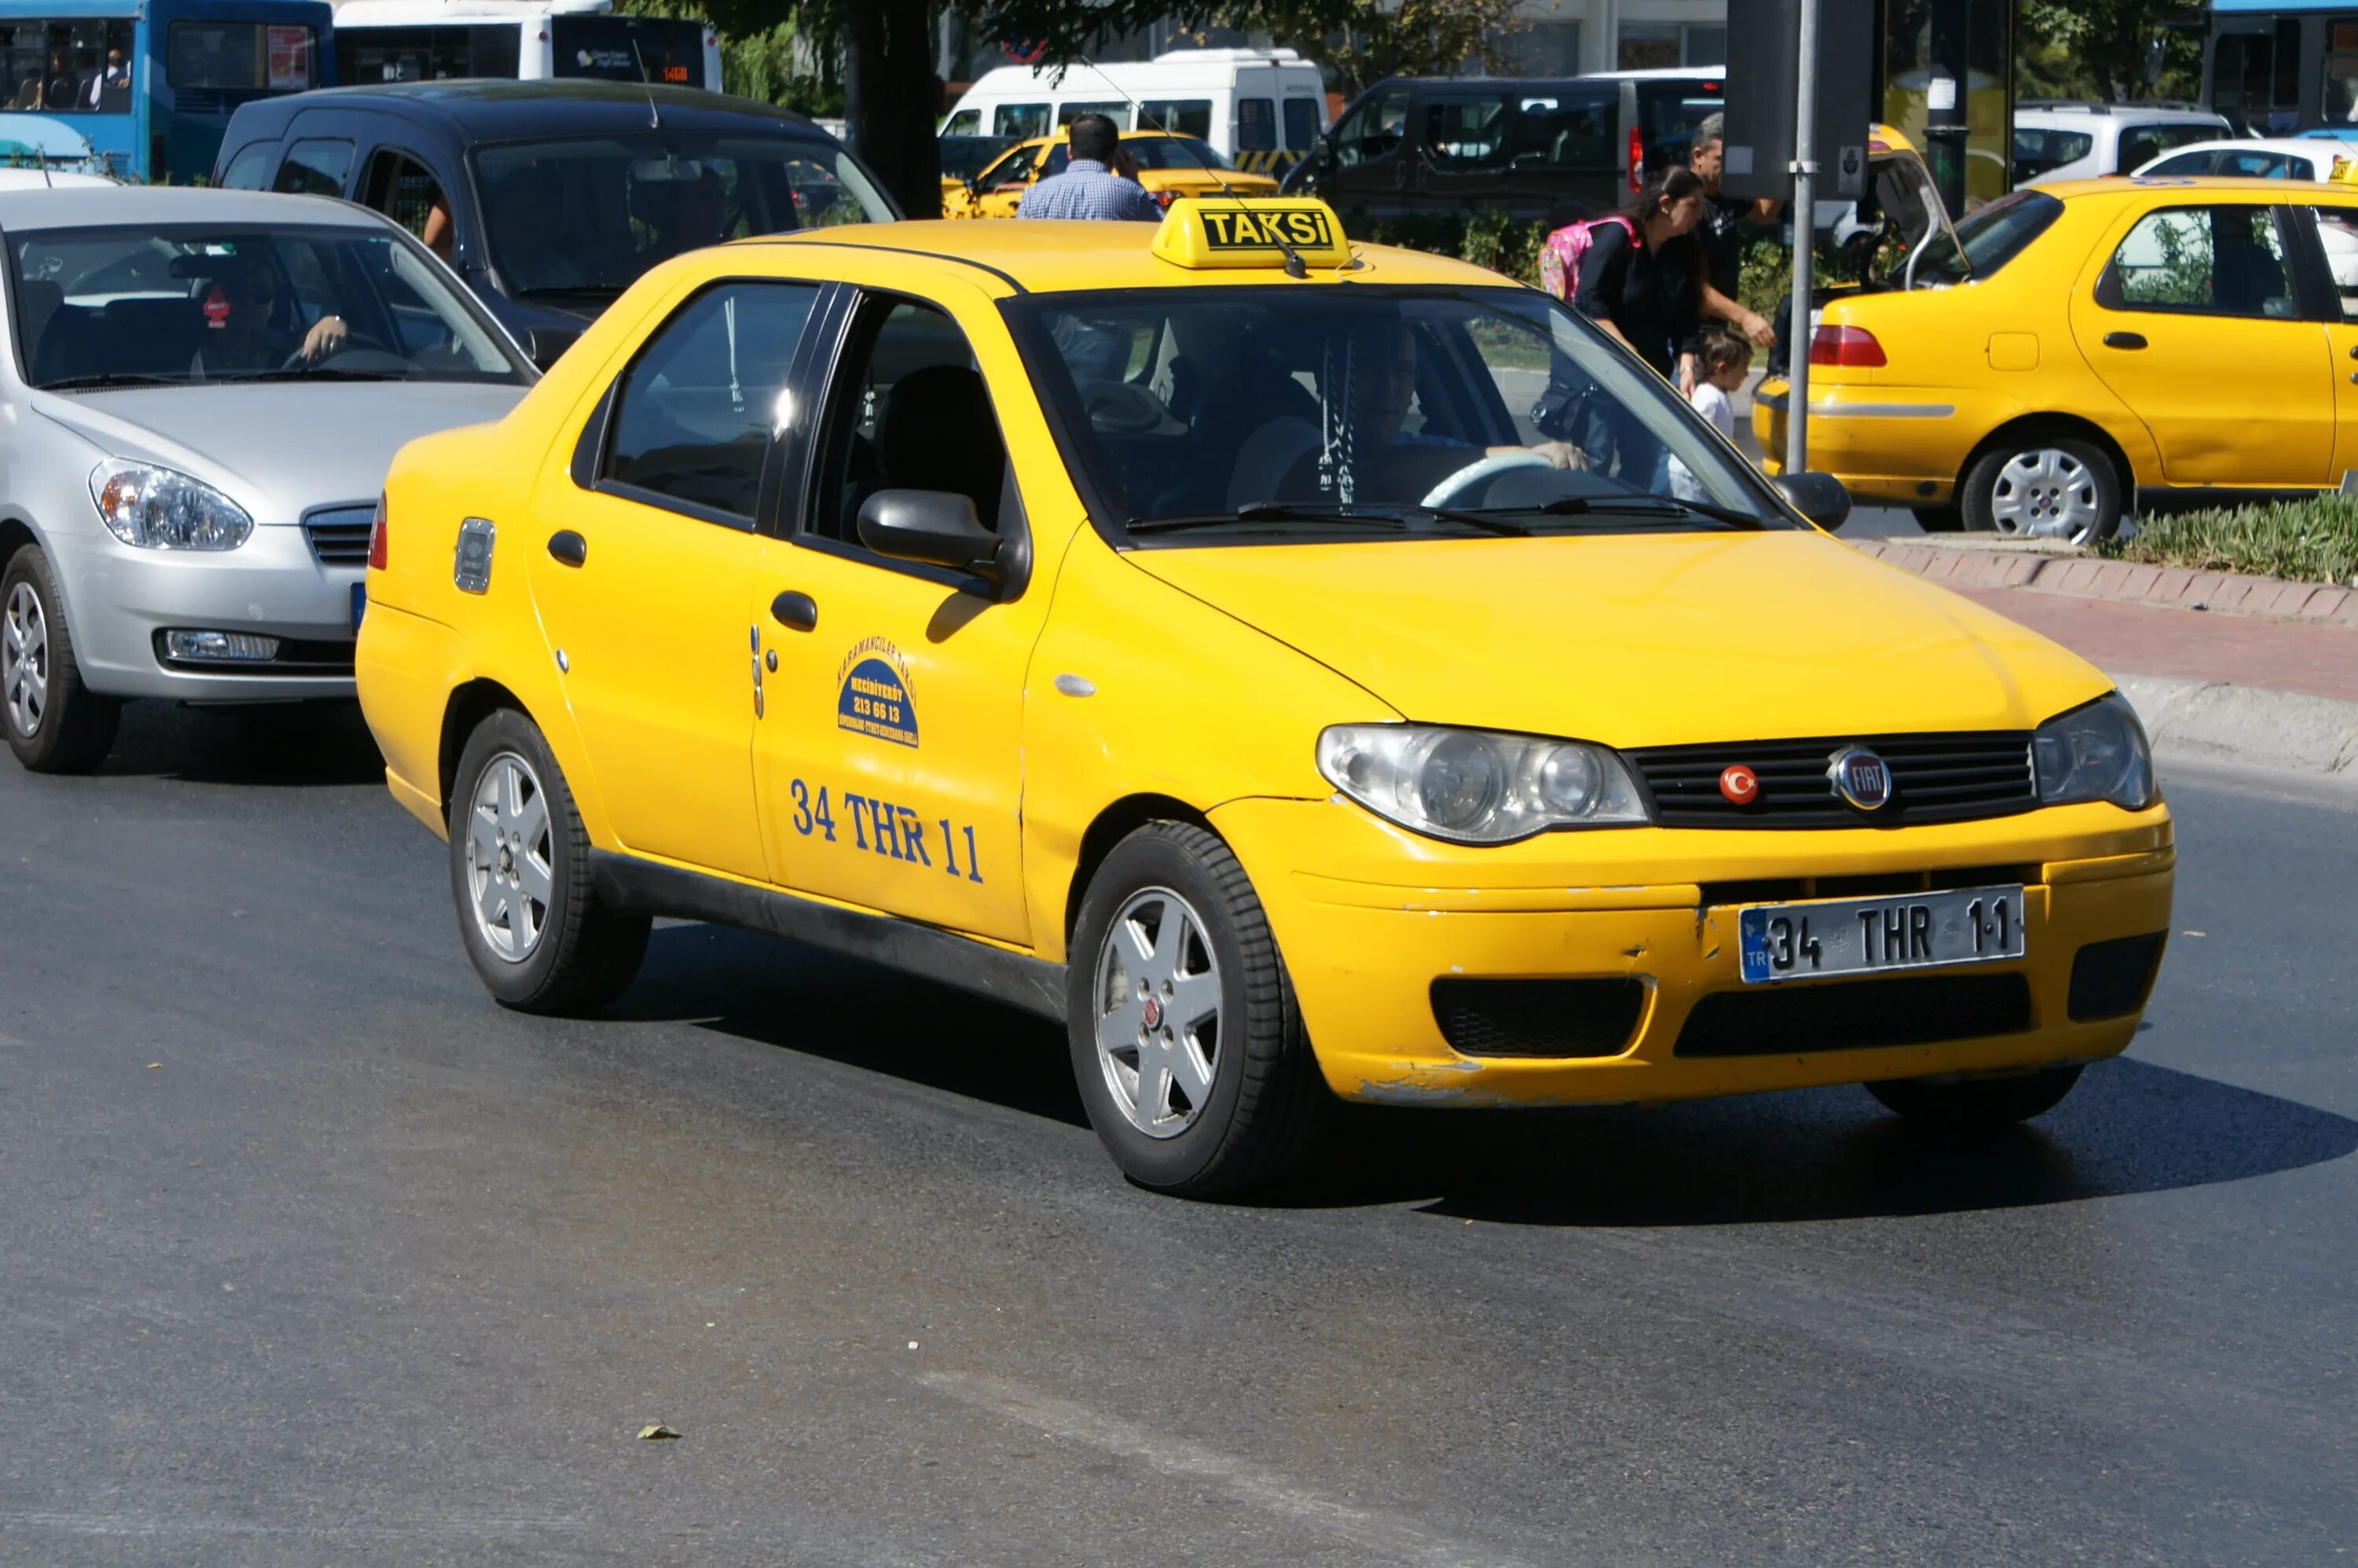 Фиат Альбеа такси. Fiat 1t Taxi. Такси в Стамбуле. Такси Фиат в Стамбуле. Купить аккаунт такси